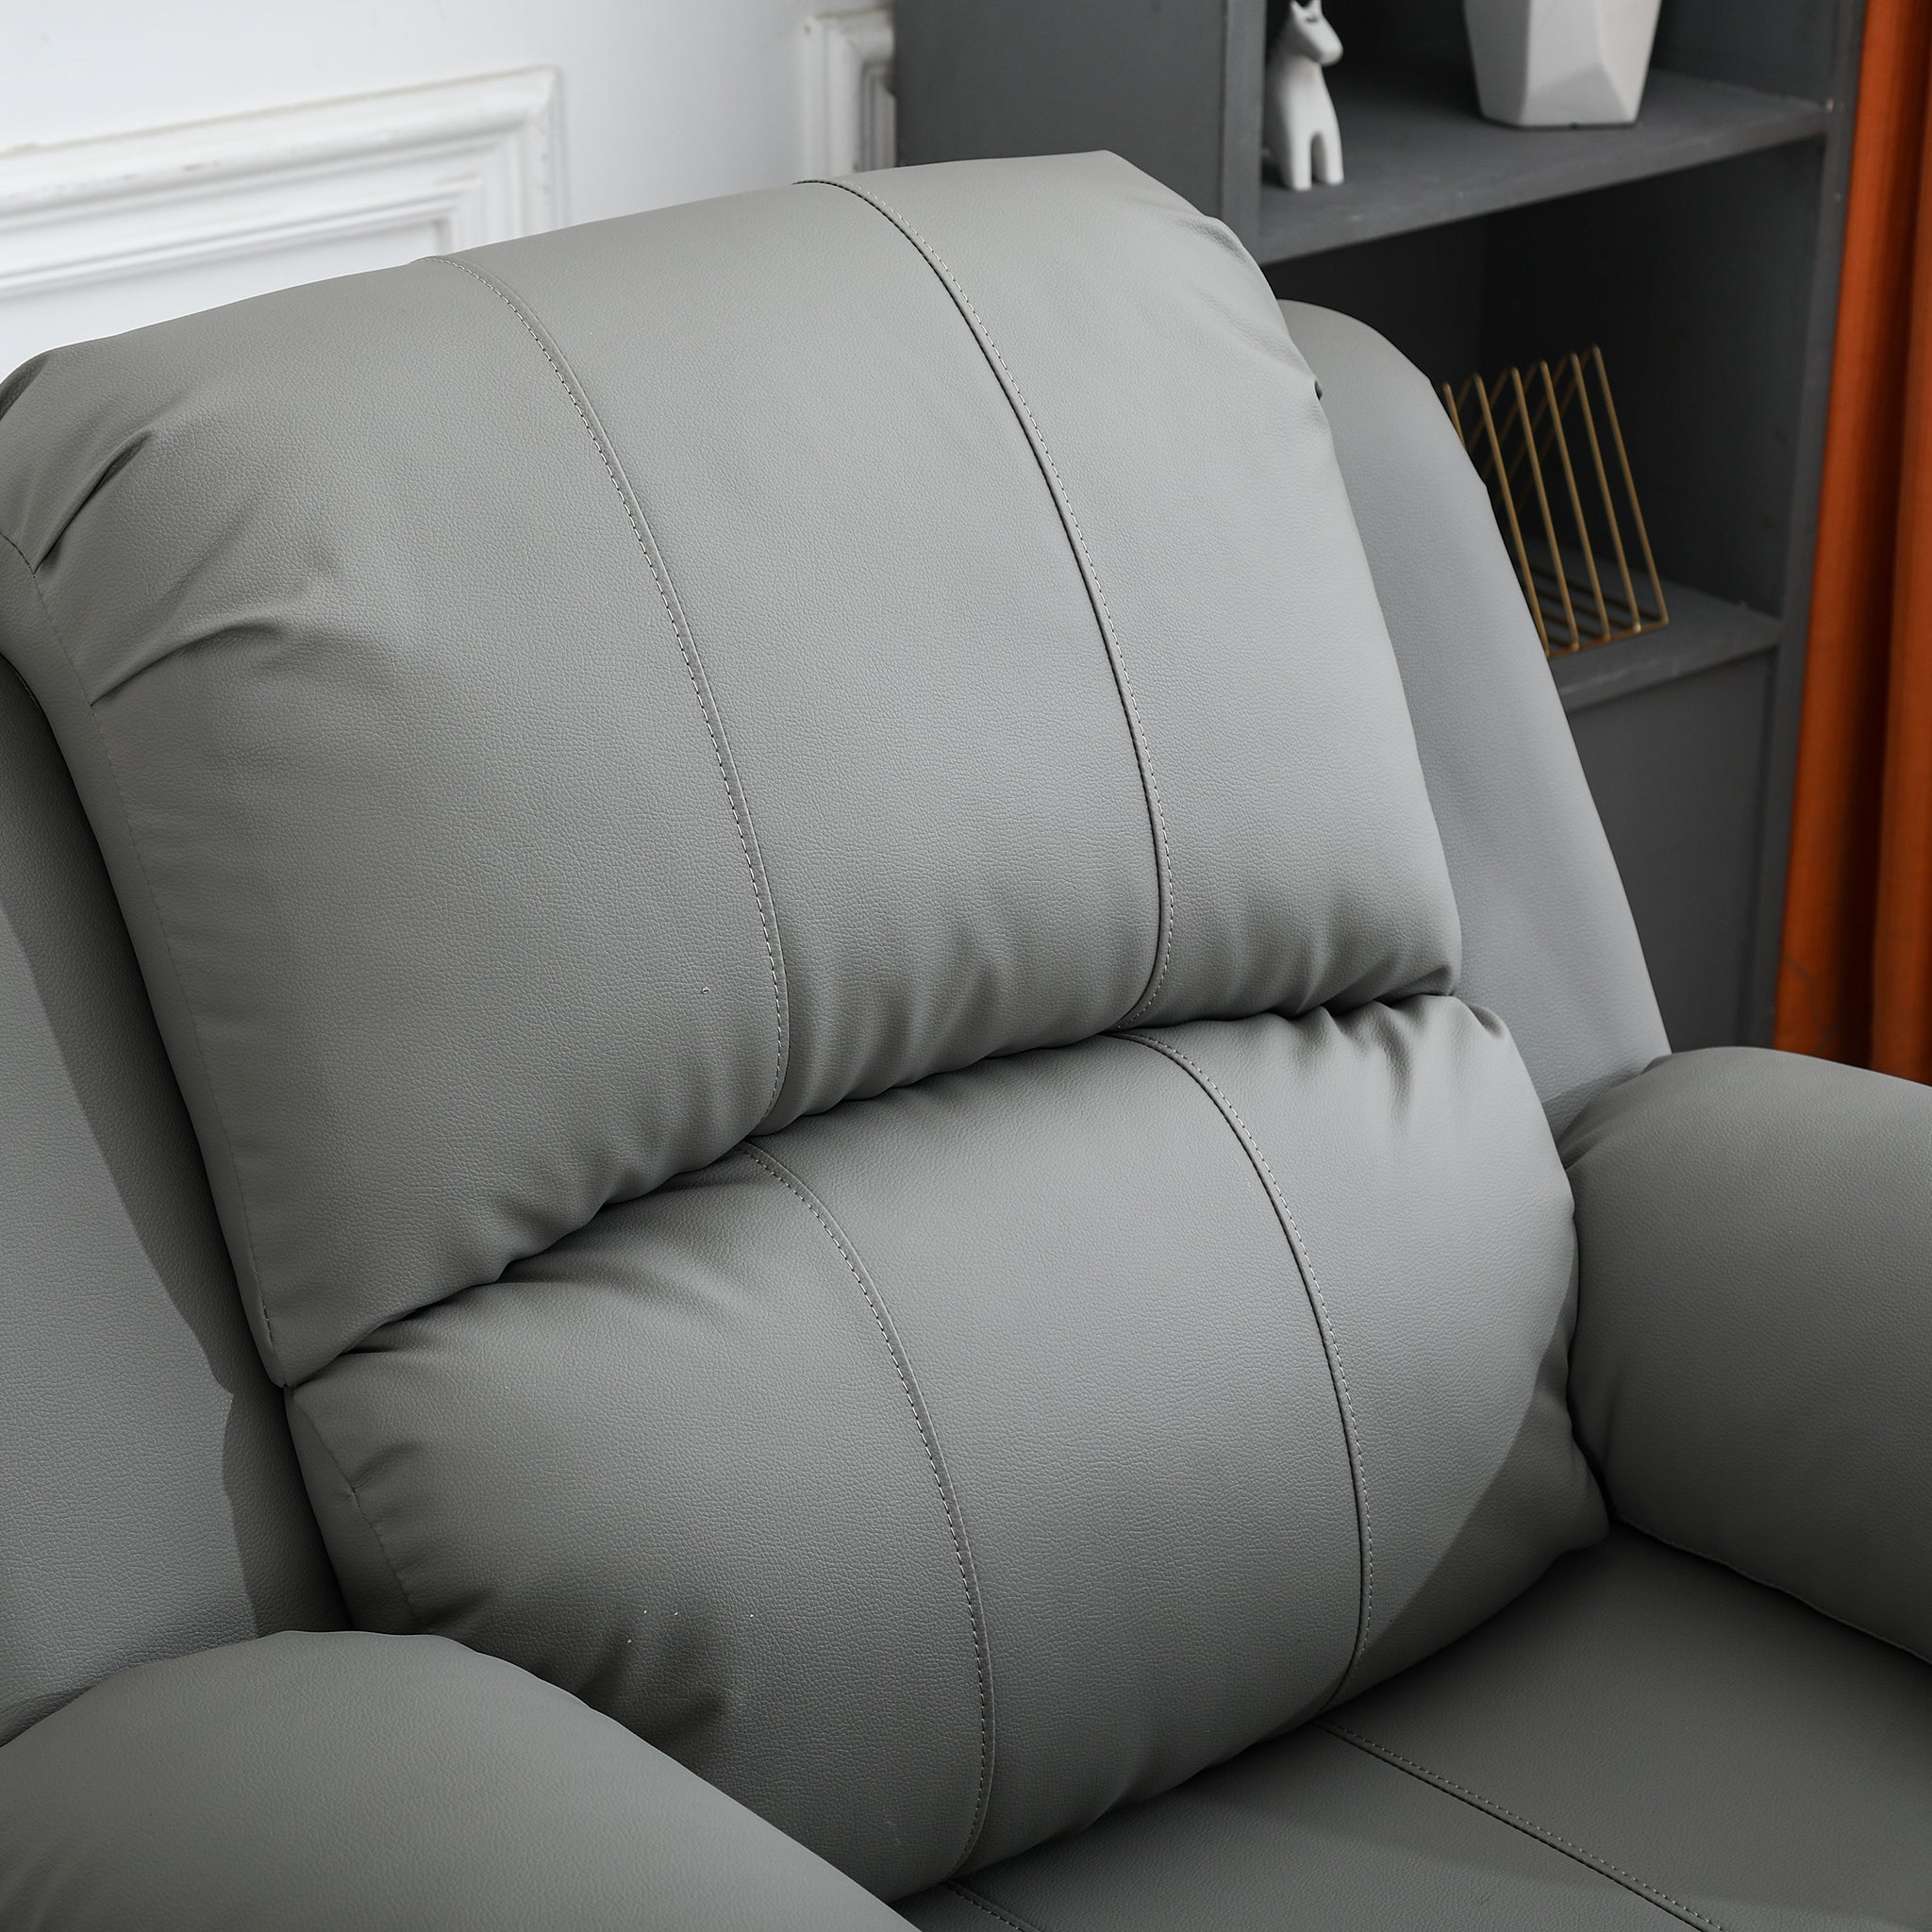 Dakota Recliner Armchair CR-2030 in a cozy living room setting7